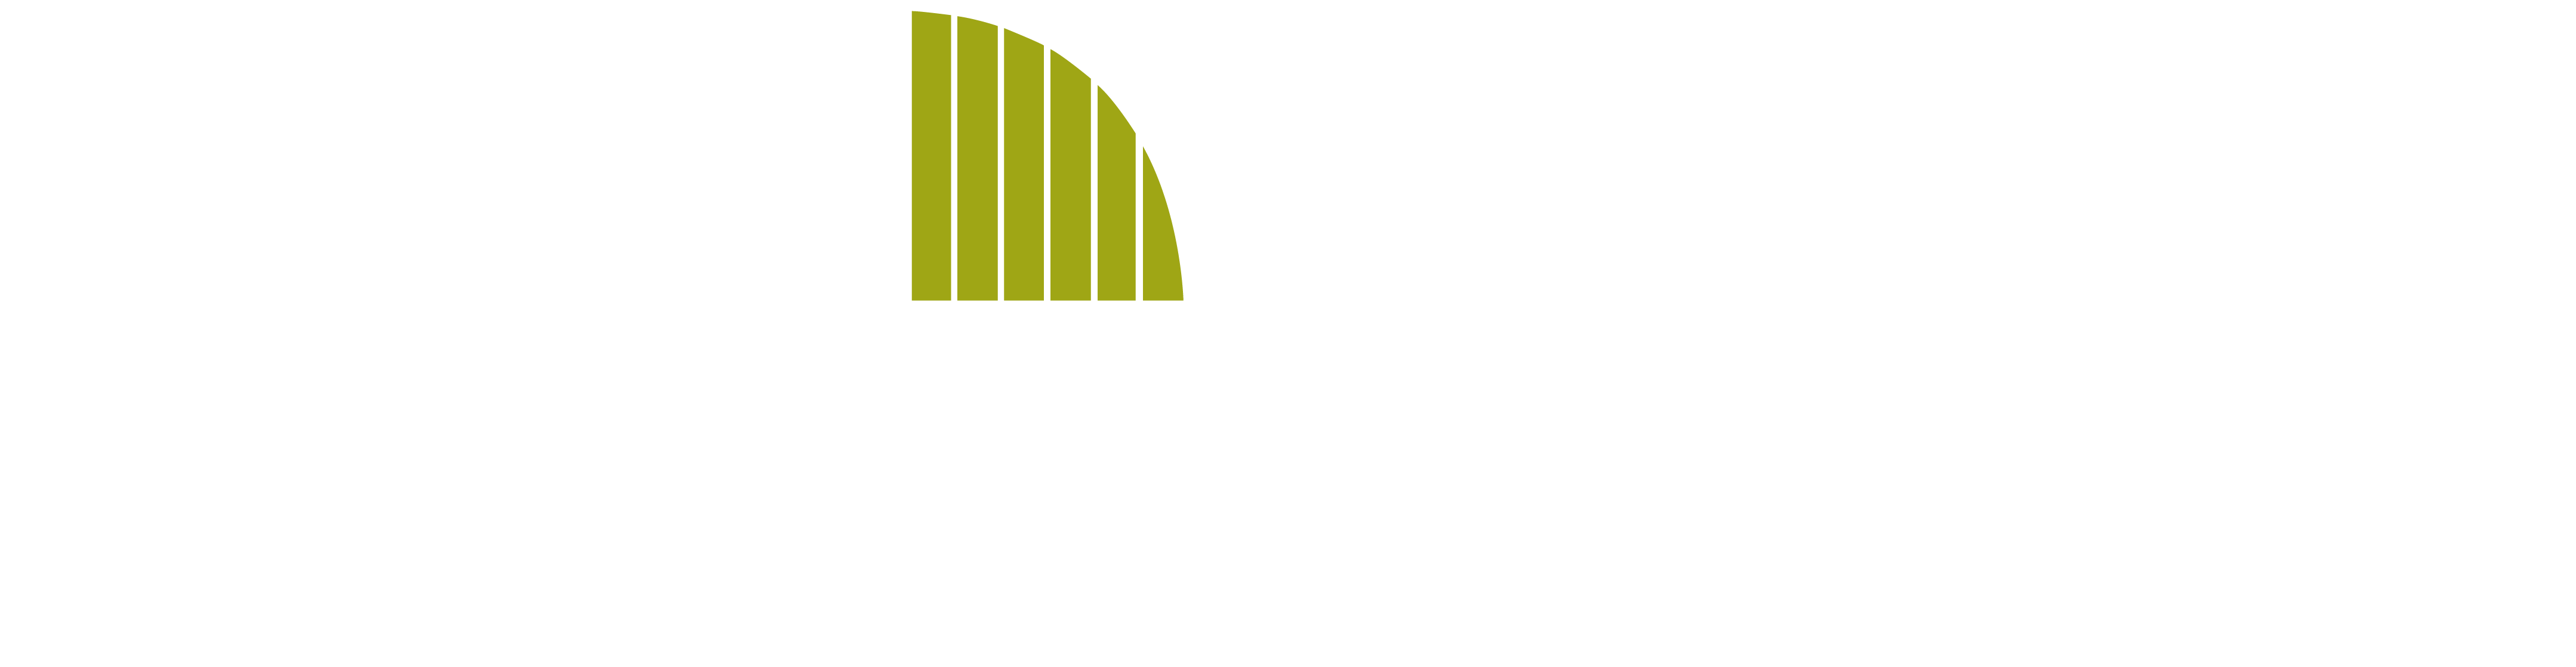 new creation decks logo - white